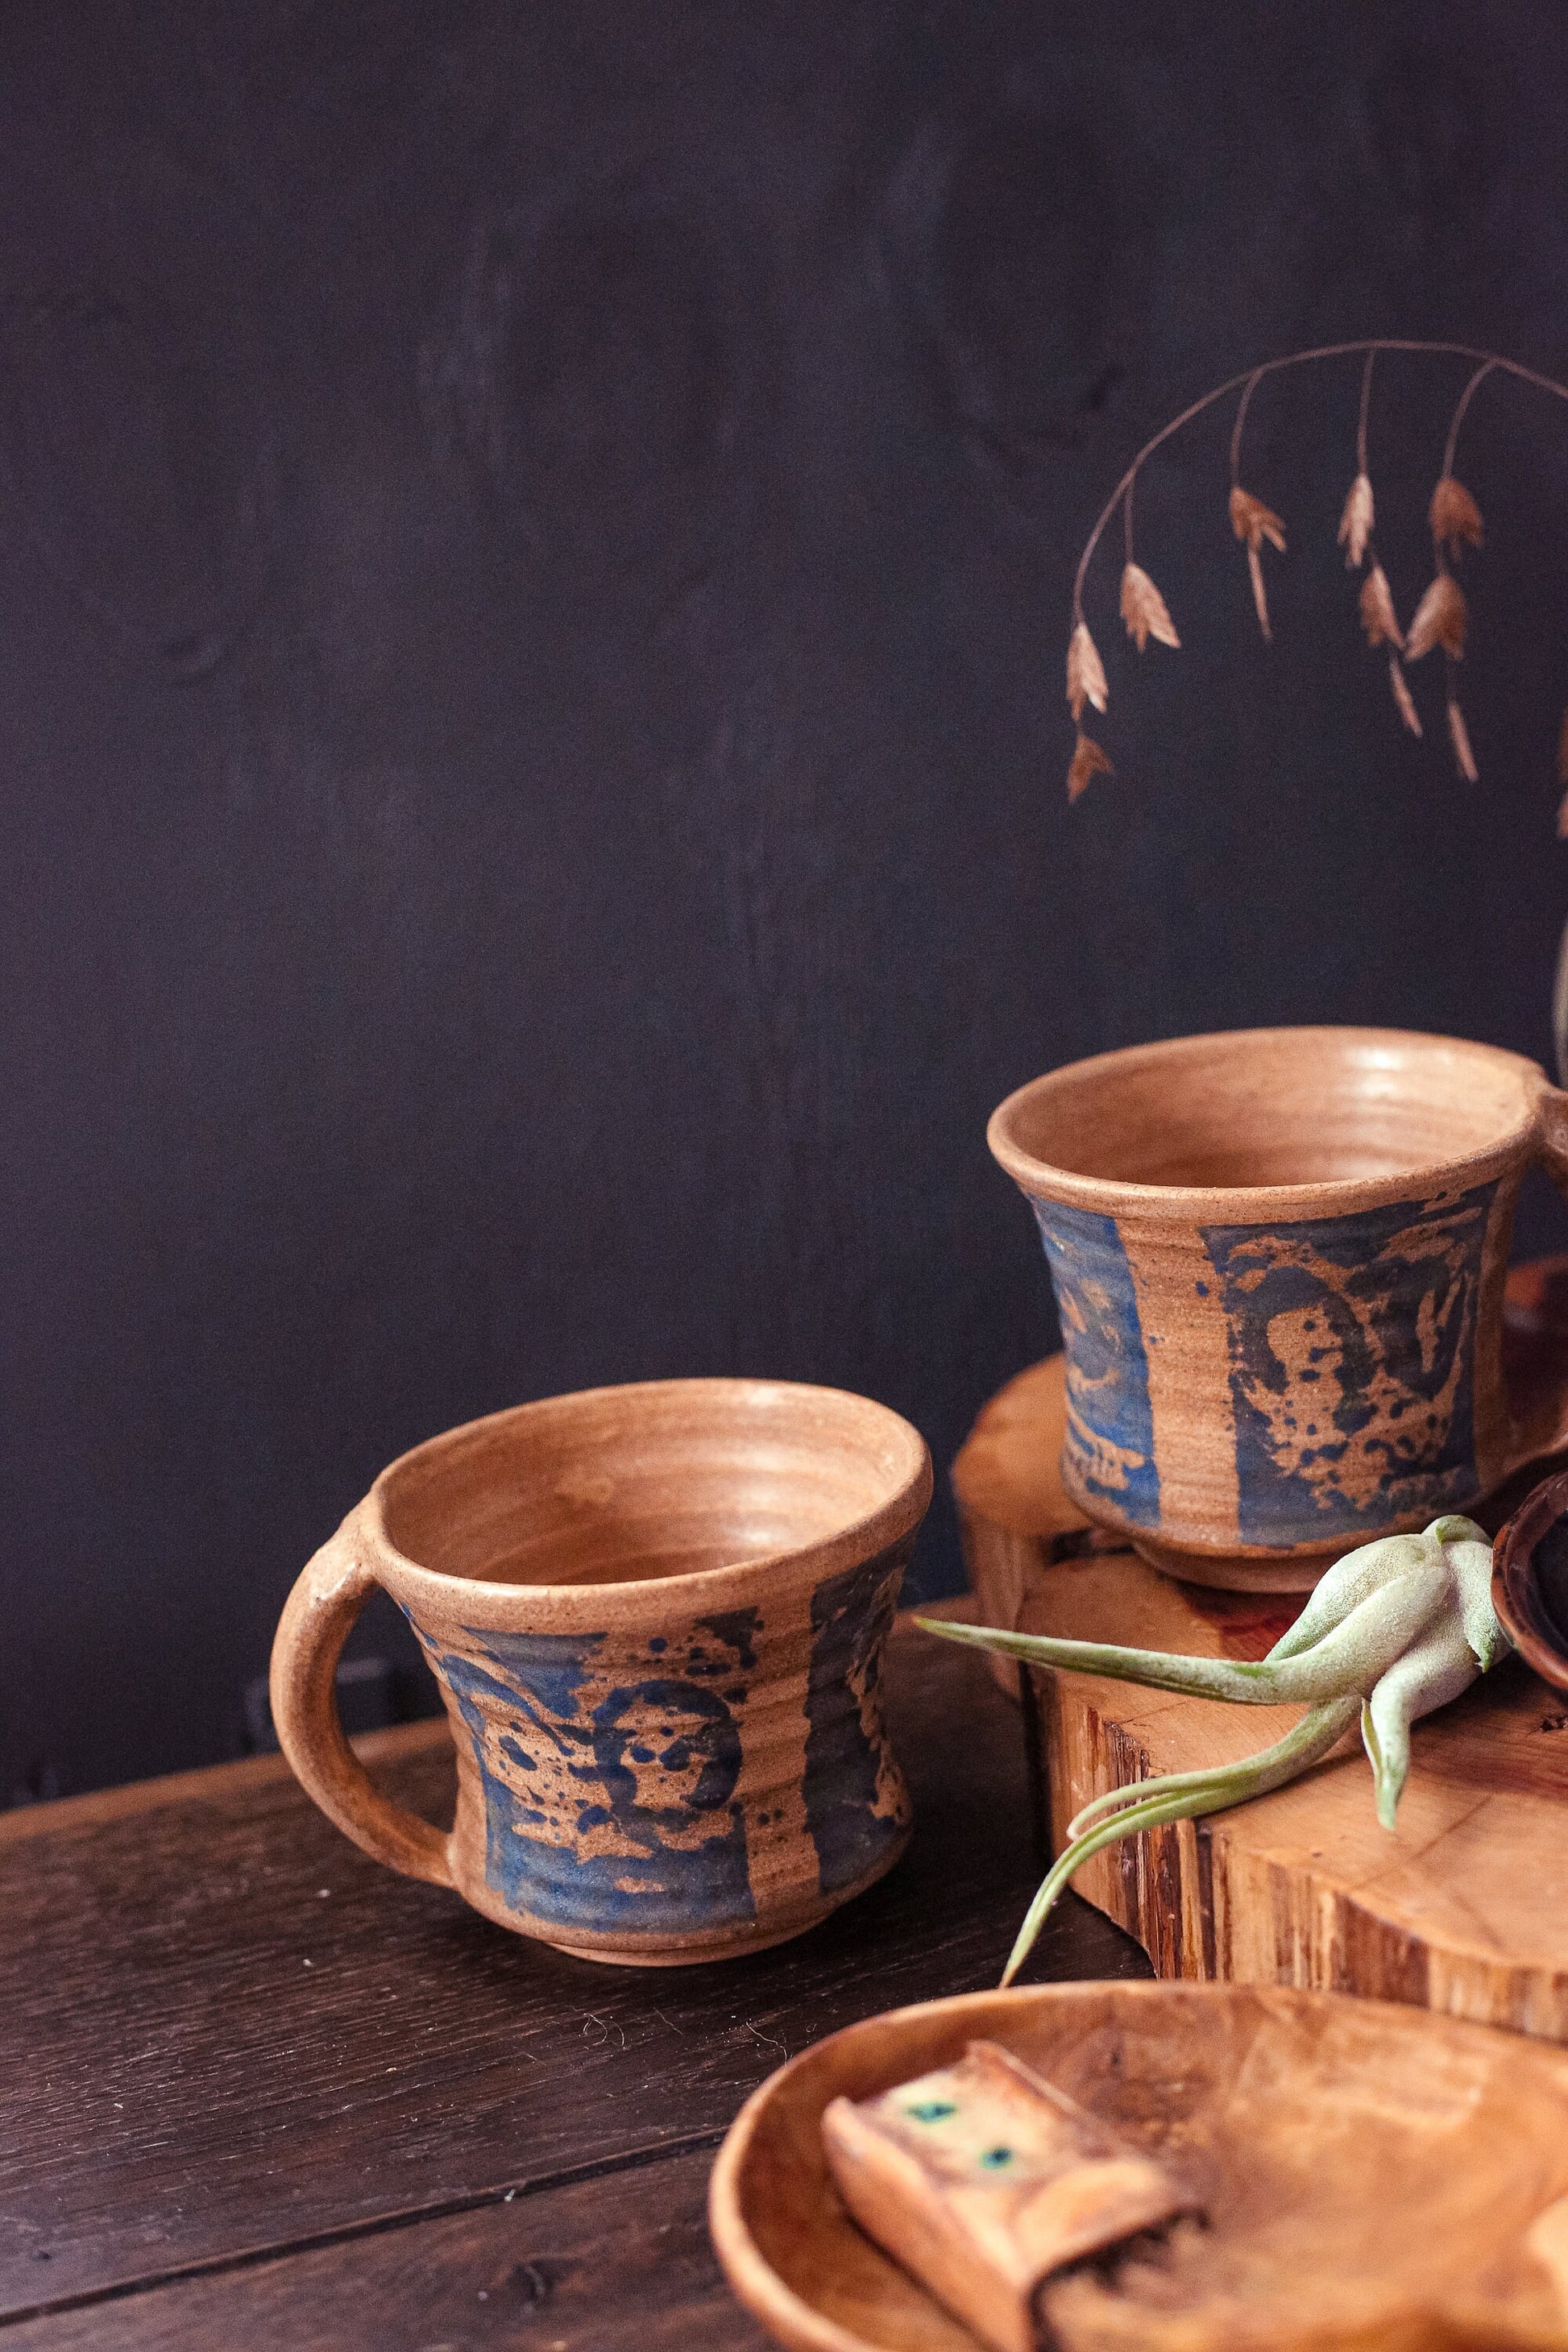 Pair of Studio Ceramic Mugs - Set of 2 Vintage Signed Studio Pottery